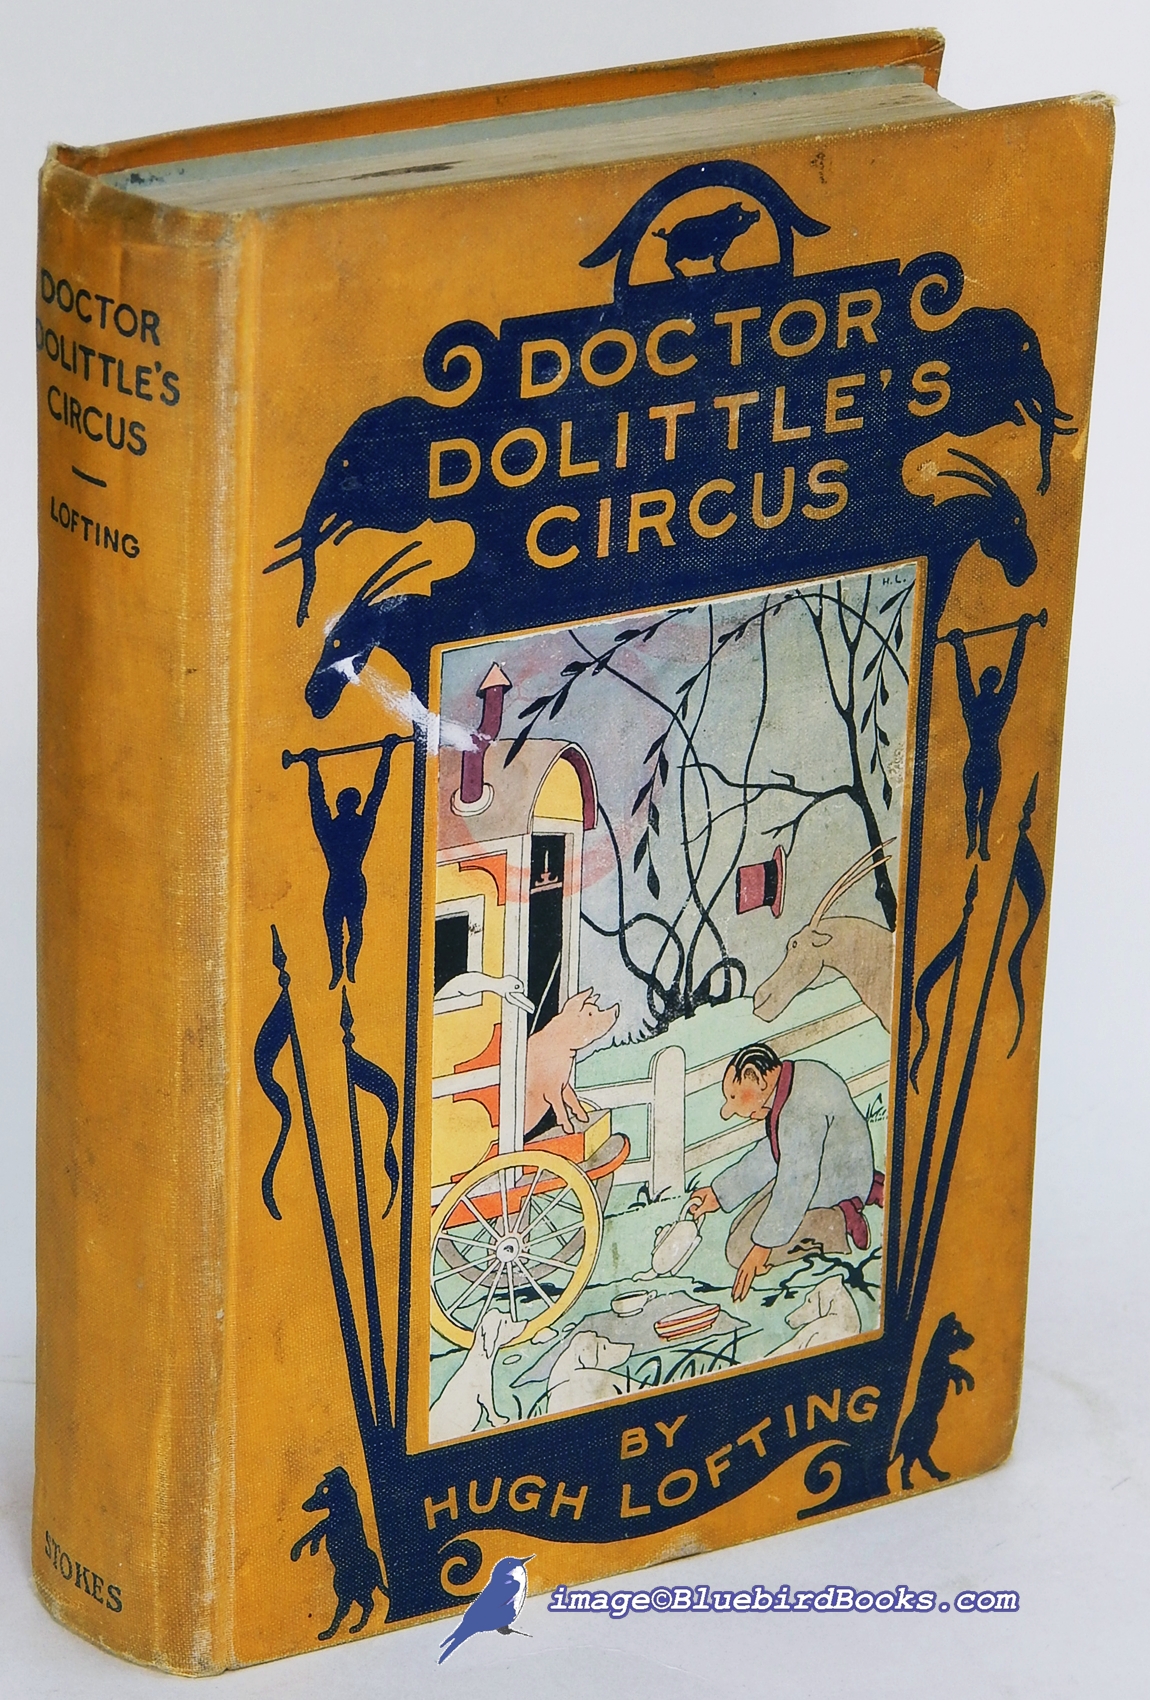 LOFTING, HUGH - Doctor Dolittle's Circus